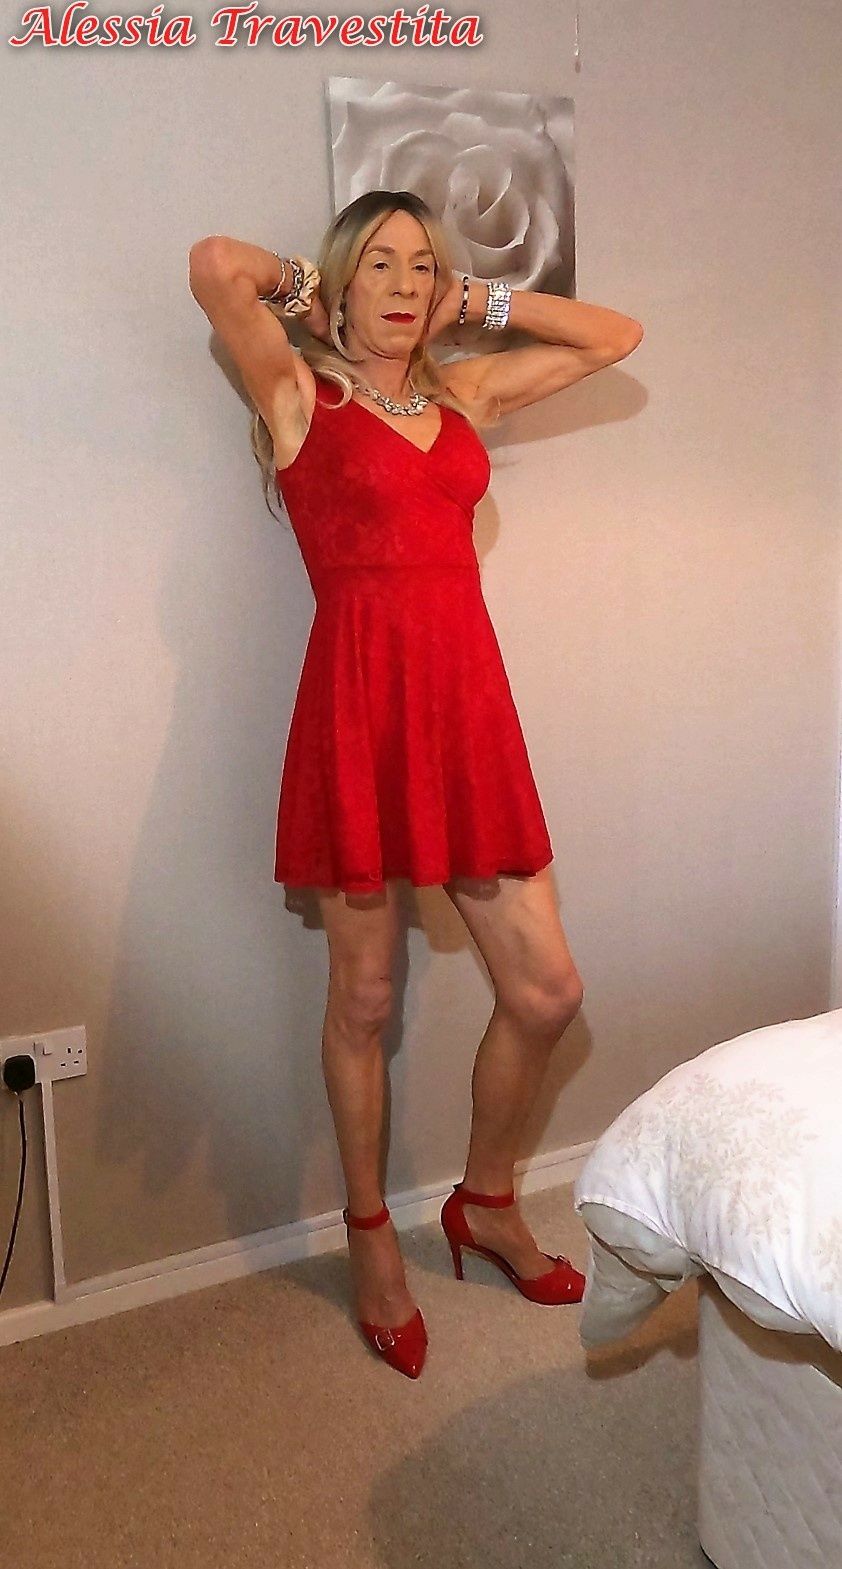 65 Alessia Travestita in Flirty Red Dress #17